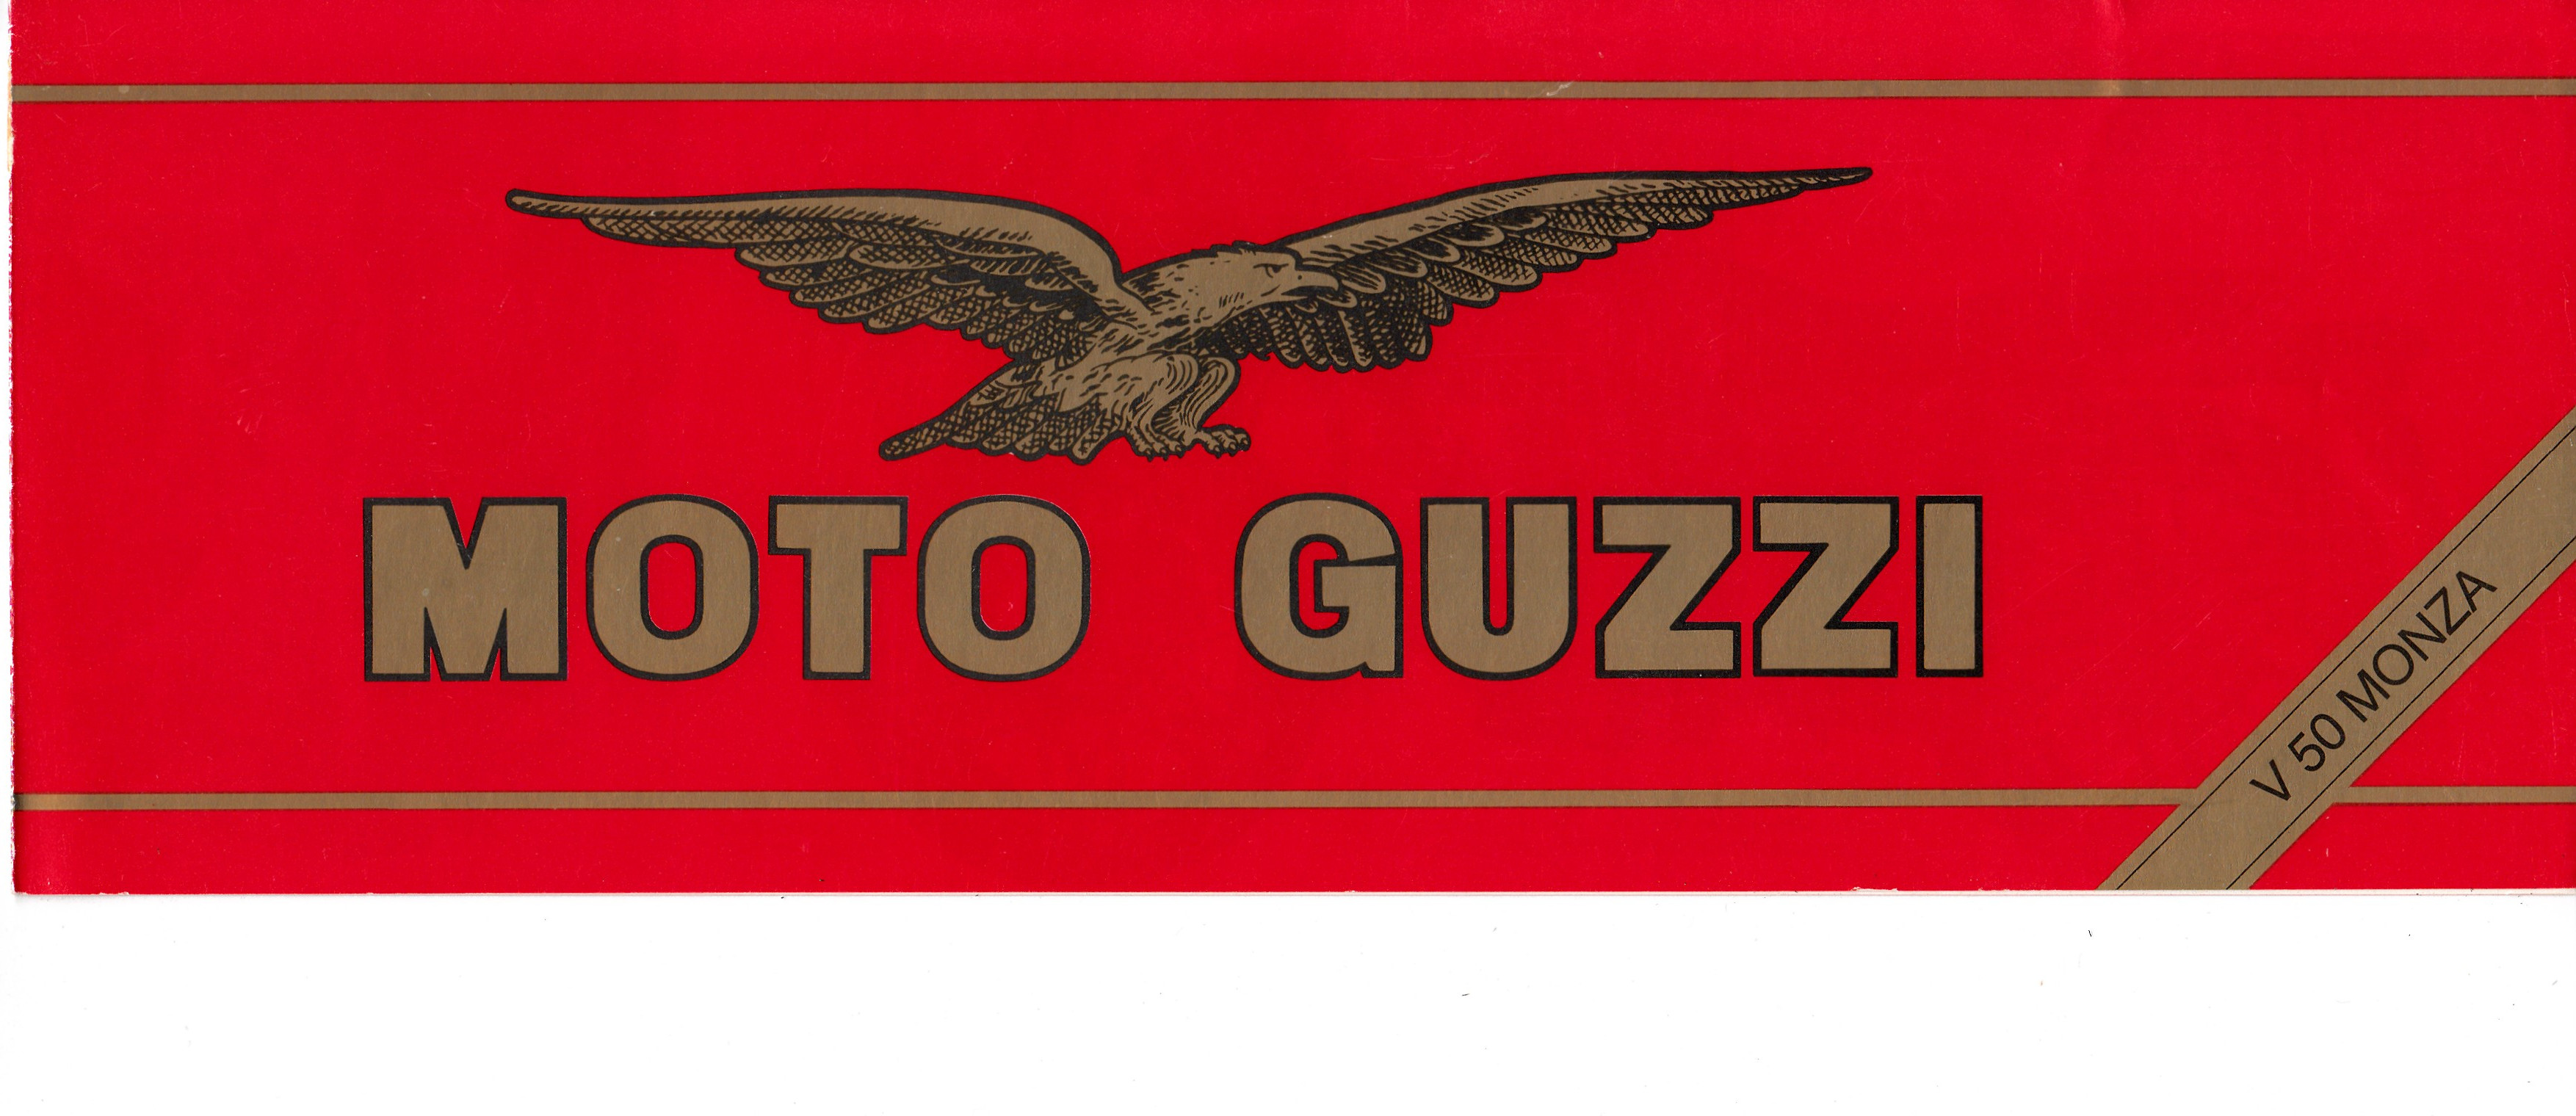 Brochure - Moto Guzzi V50 Monza (folded style brochure)